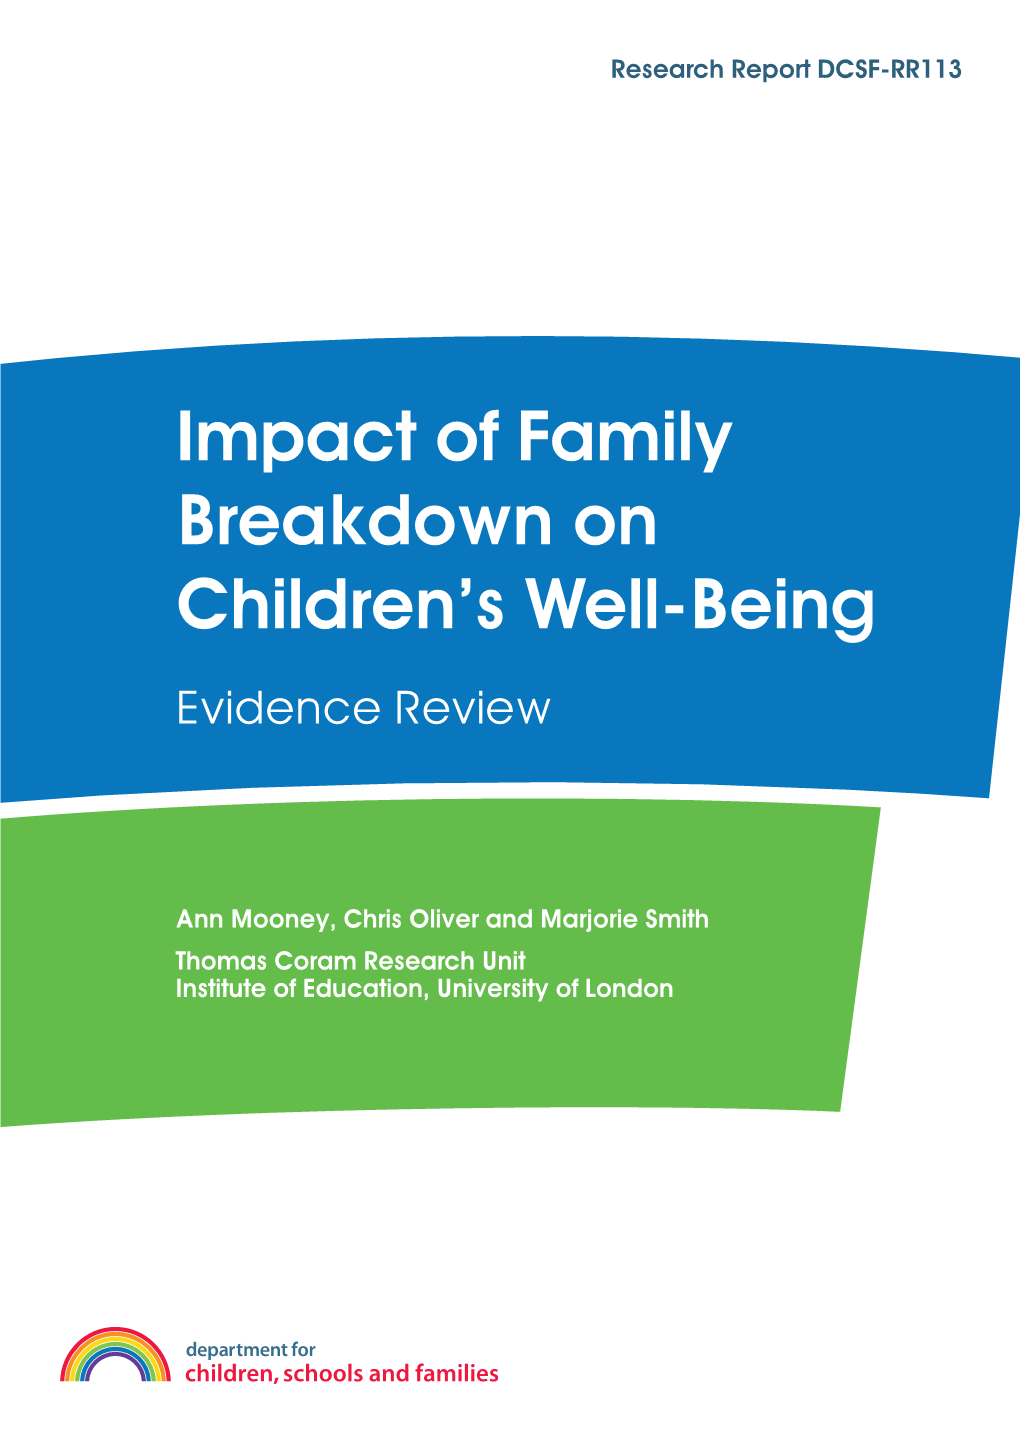 Impact of Family Breakdown on Children's Well-Being